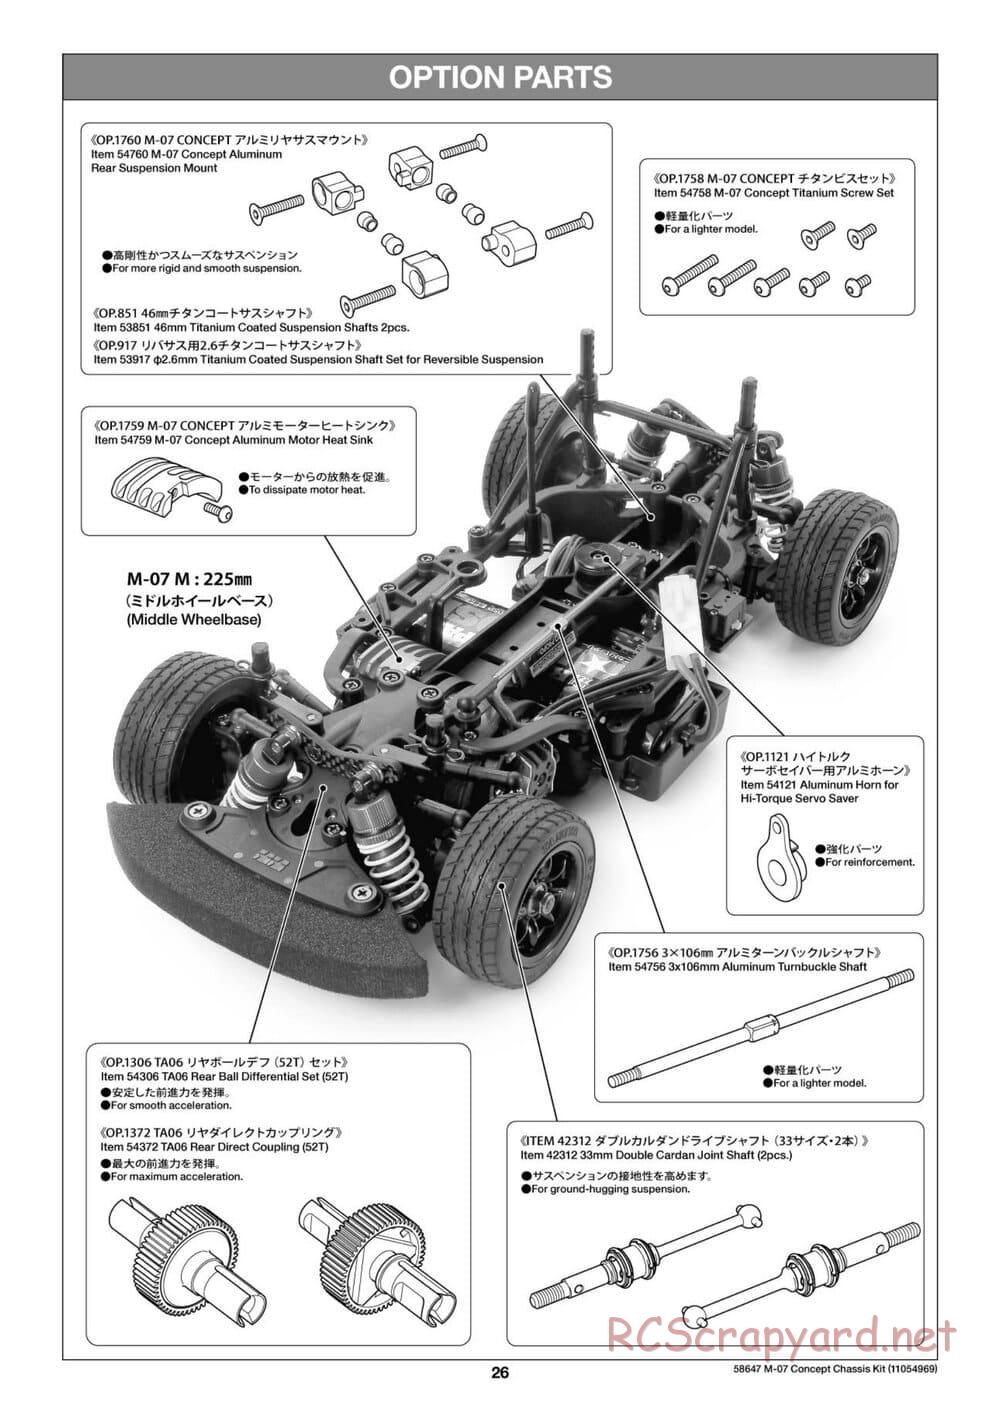 Tamiya - M-07 Concept Chassis - Manual - Page 26